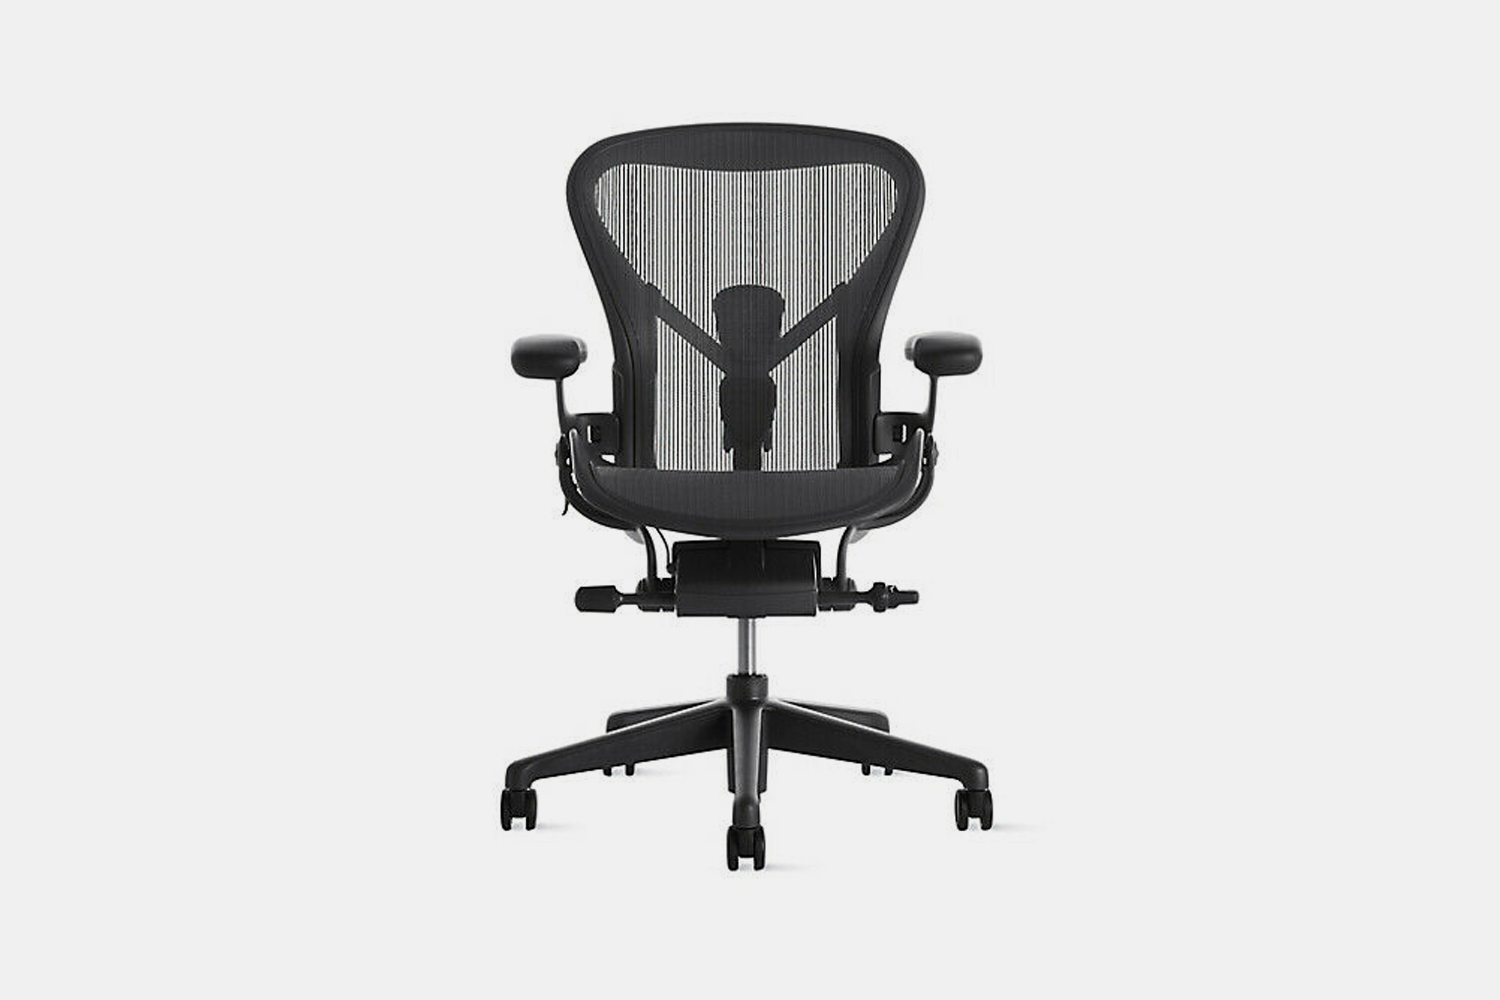 This sleek black, ergonomic office chair from Herman Miller is on sale on Ebay.